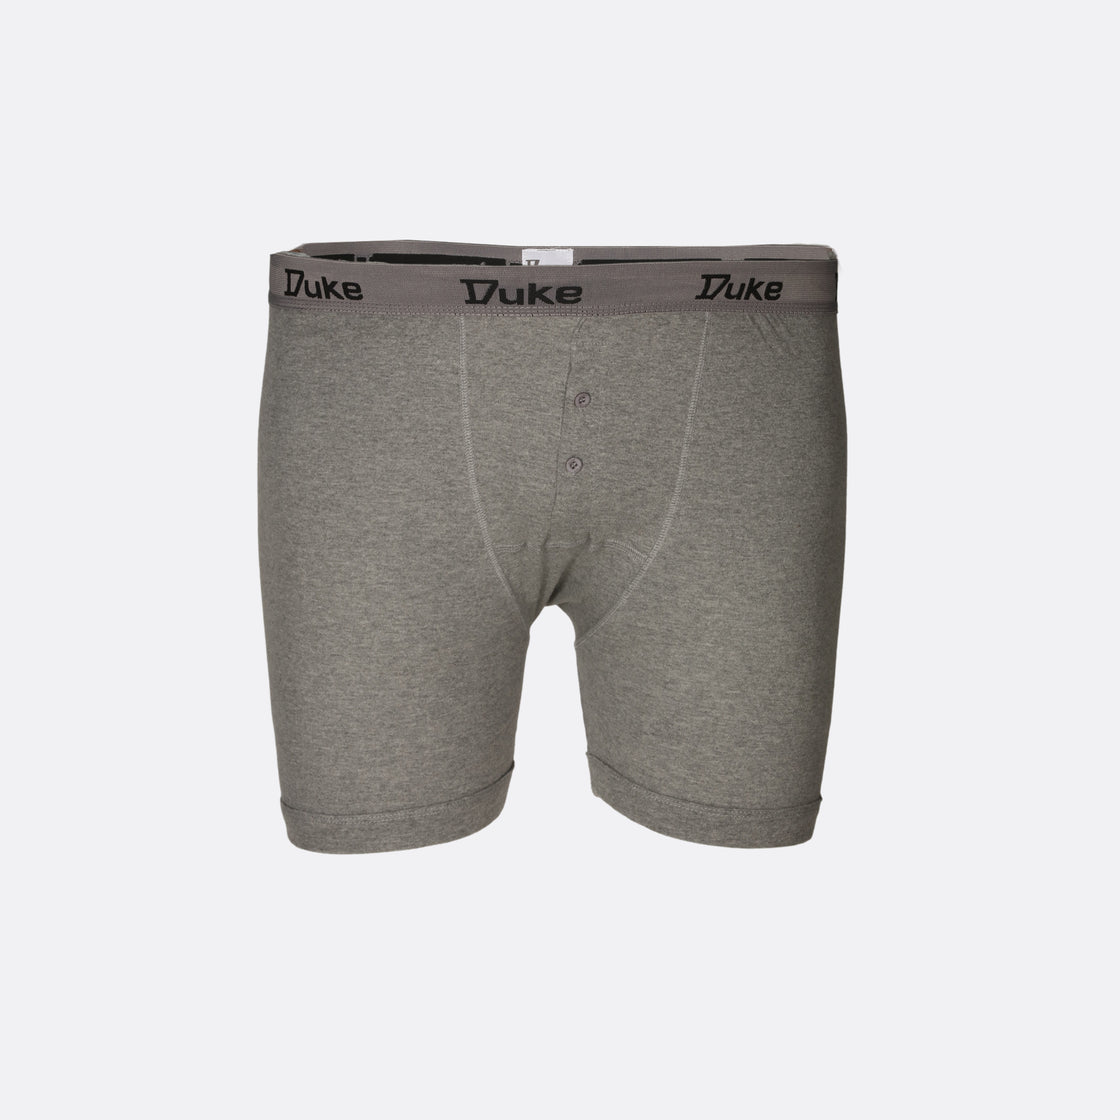 Duke Boxer Shorts